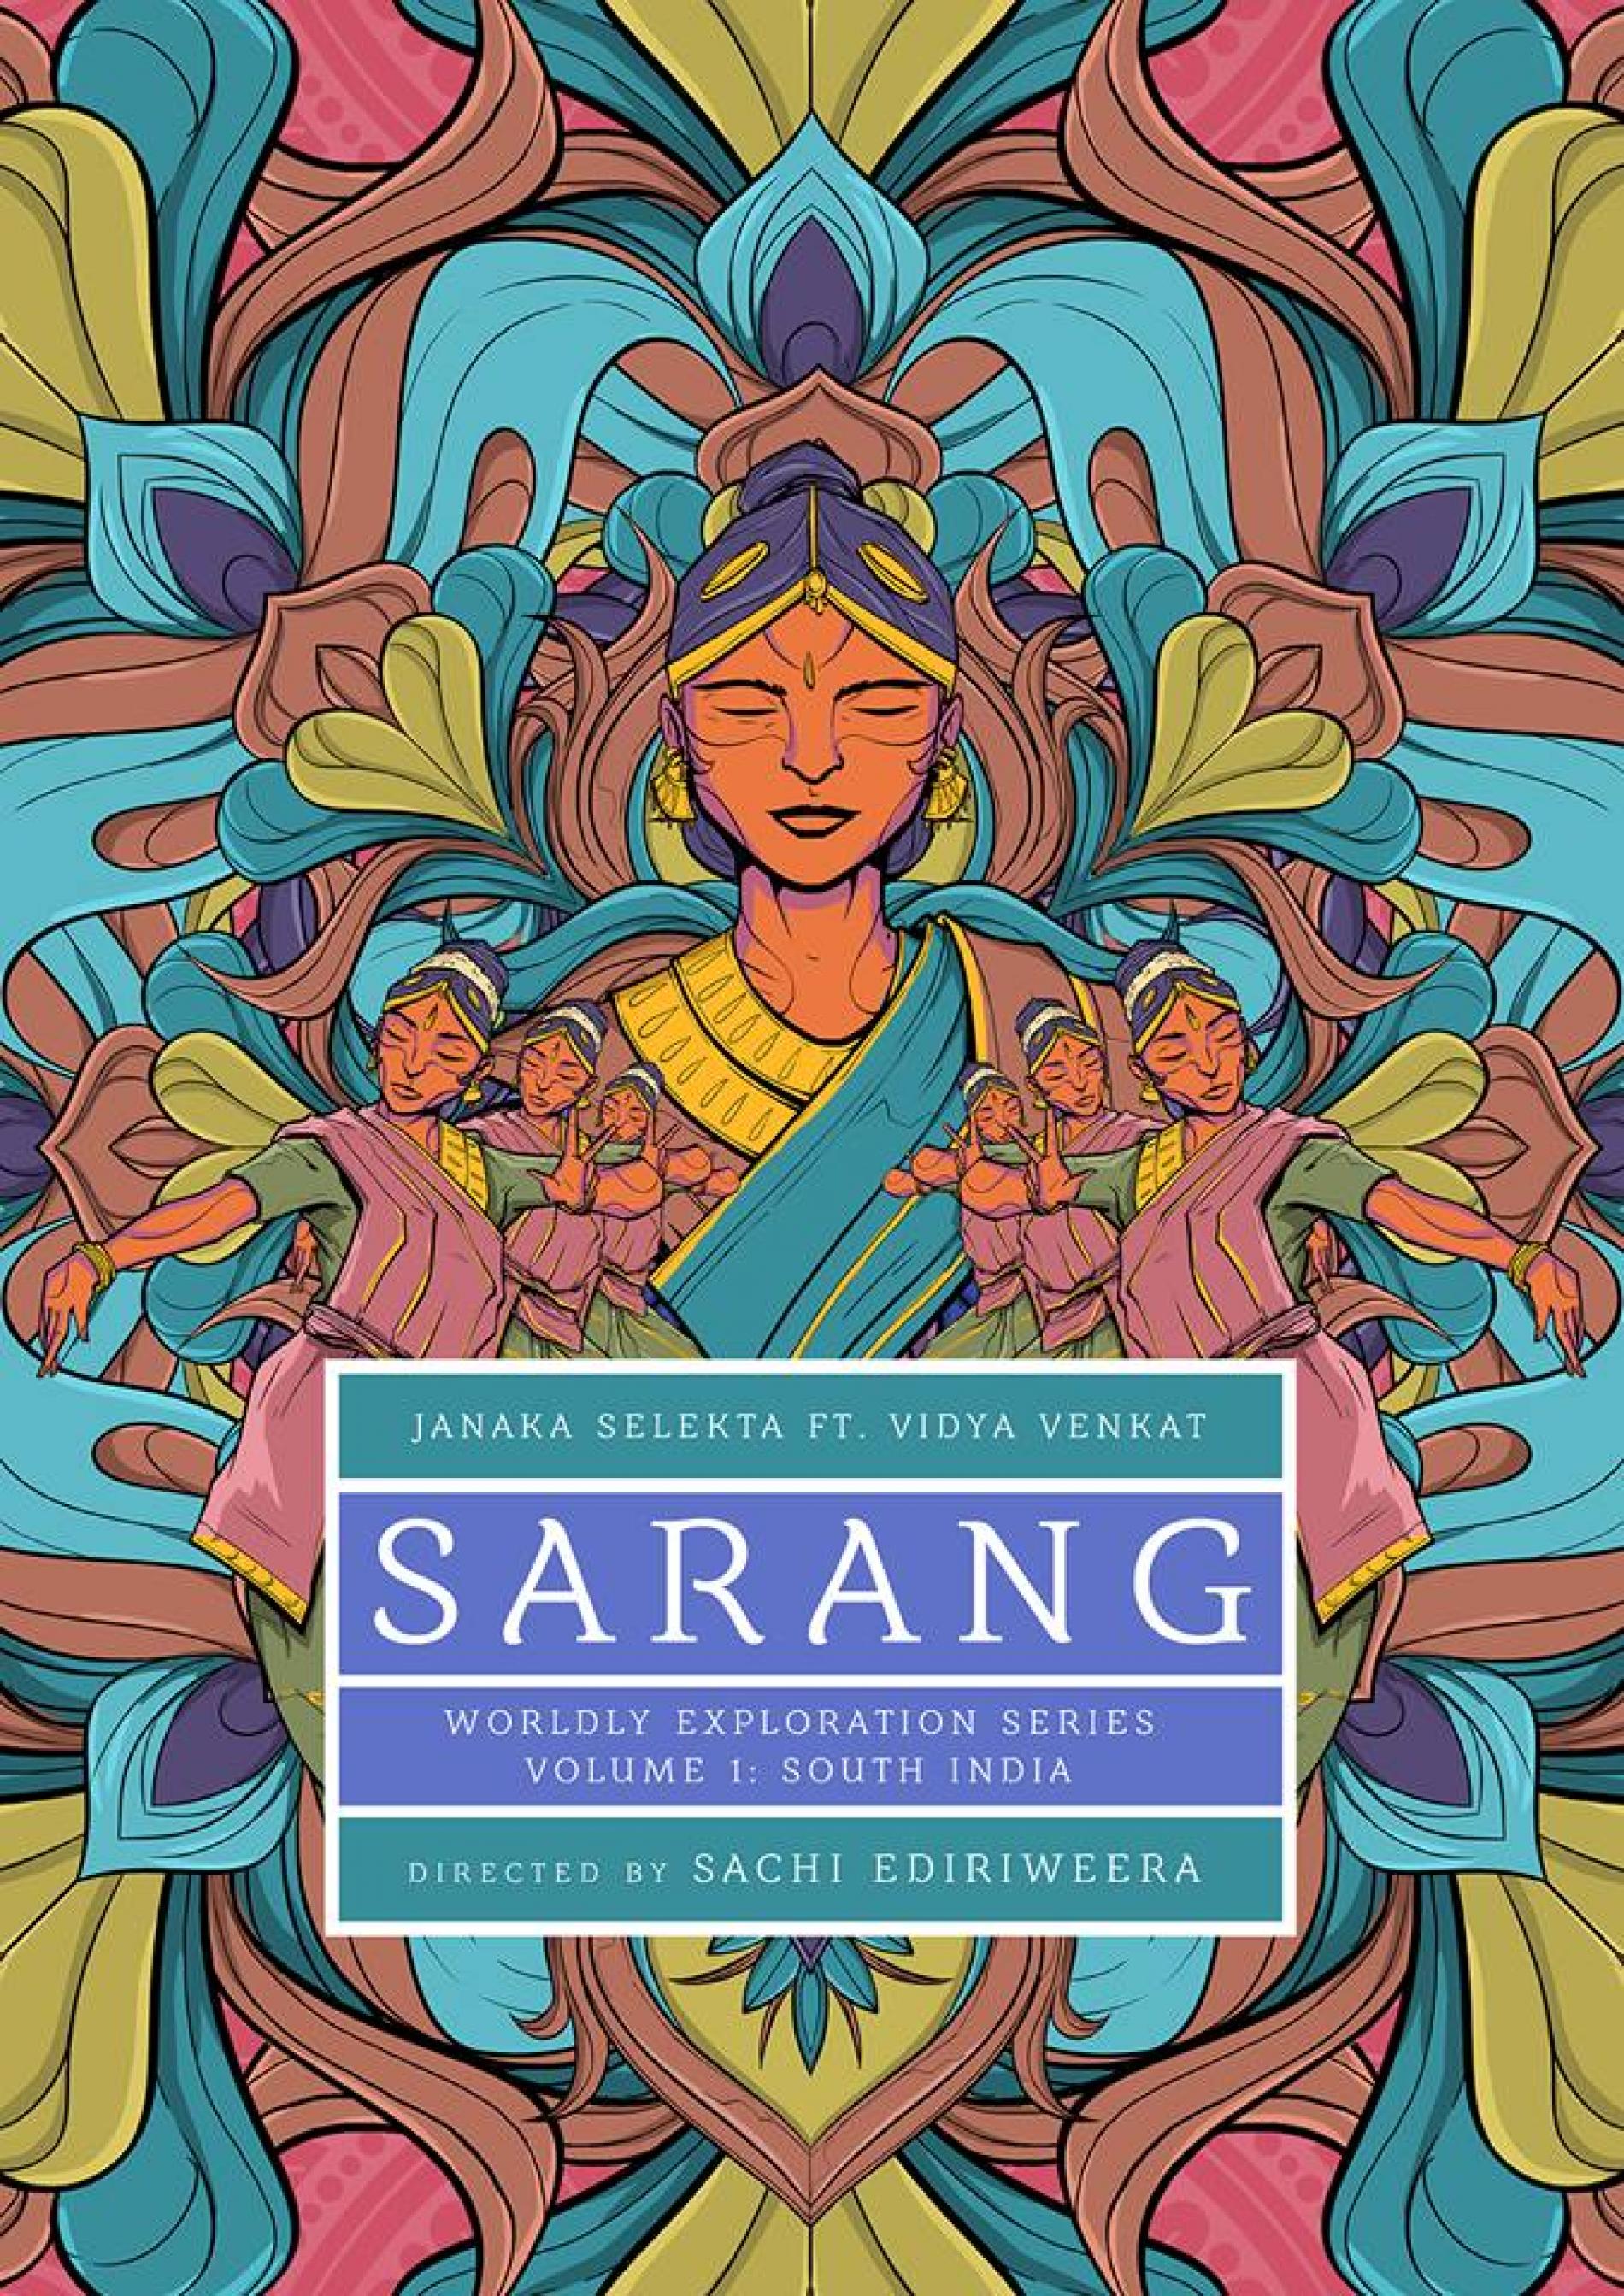 The Teaser For ‘Sarang’ By Janaka Selekta Is Here!